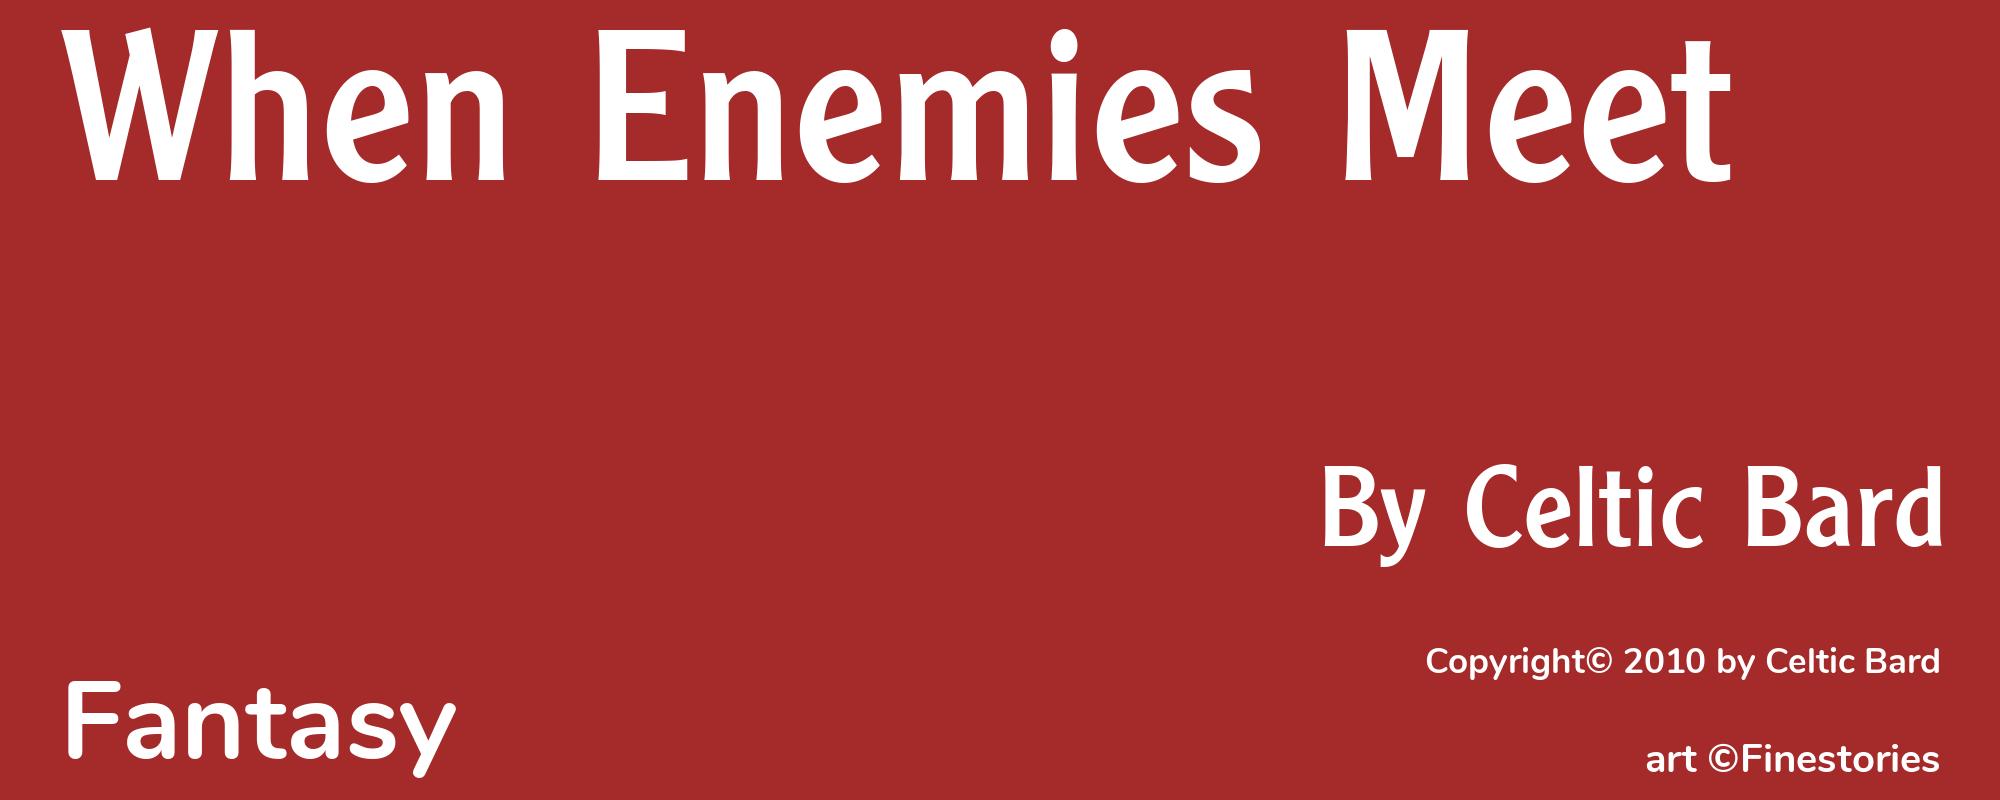 When Enemies Meet - Cover